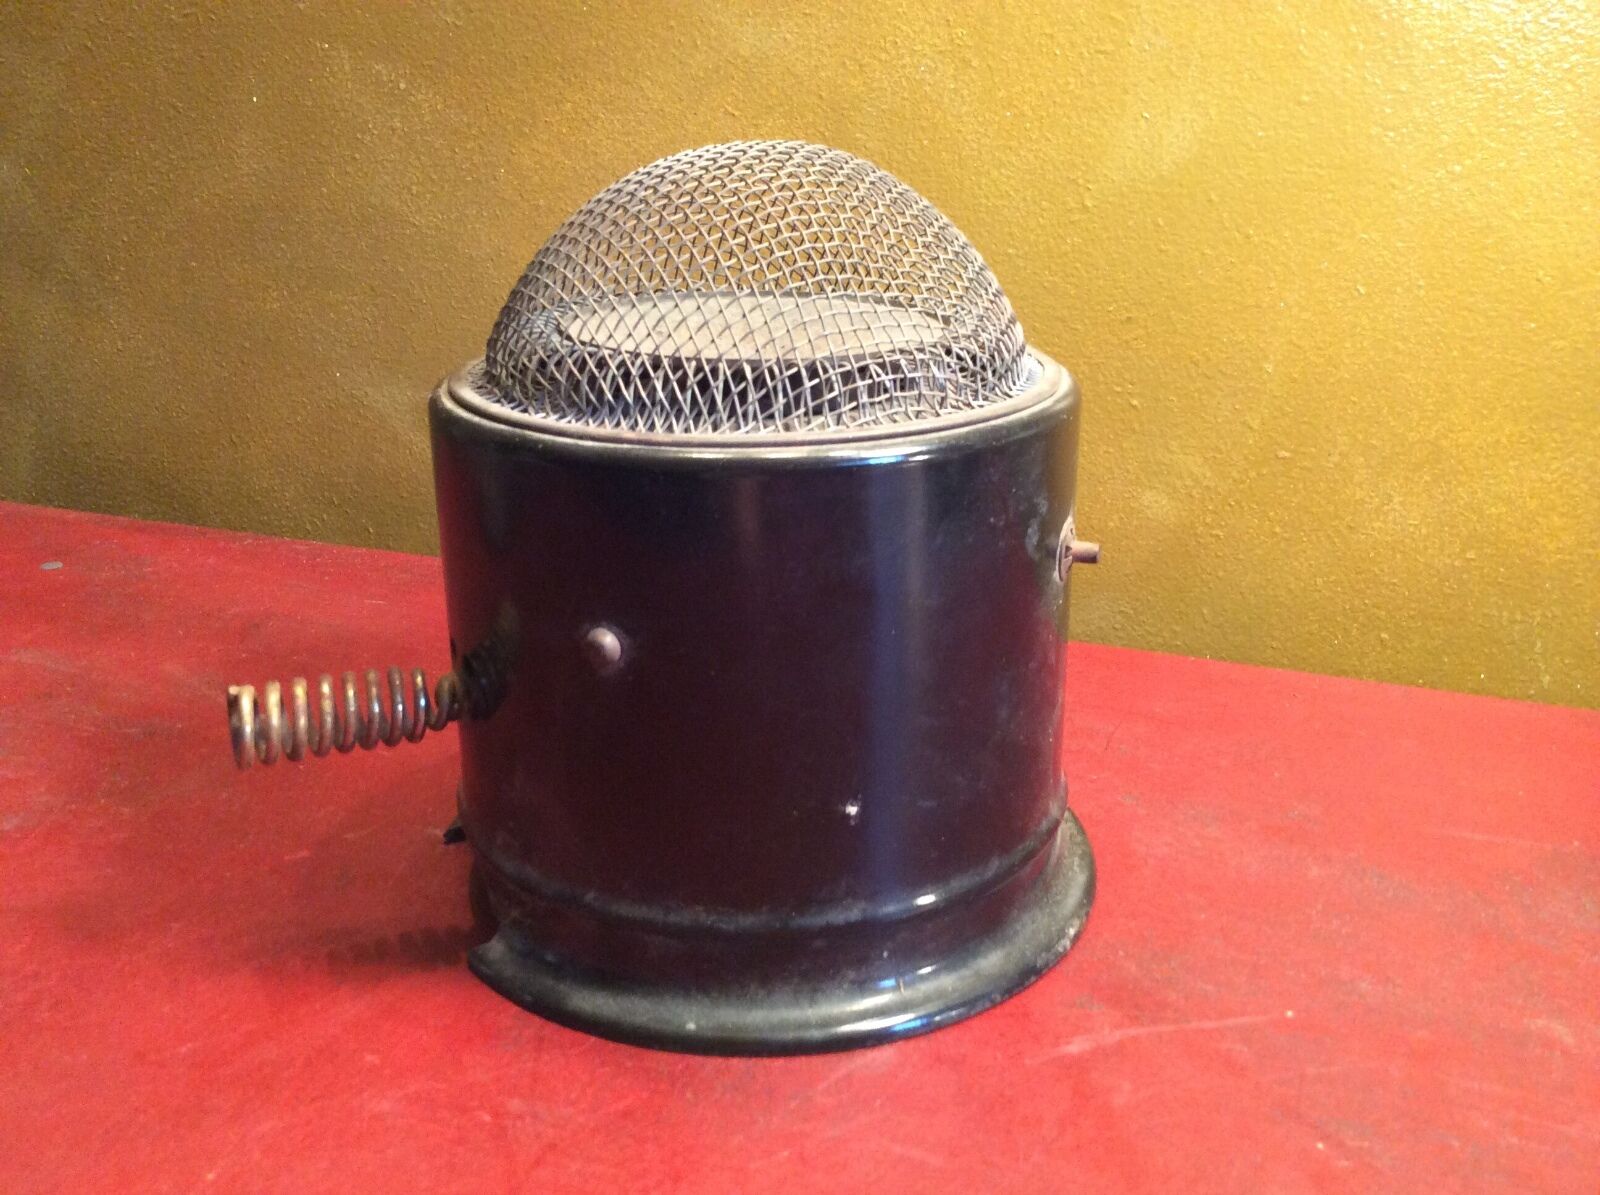 Vintage Primitive Japanese kerosene Heater top..great for decor